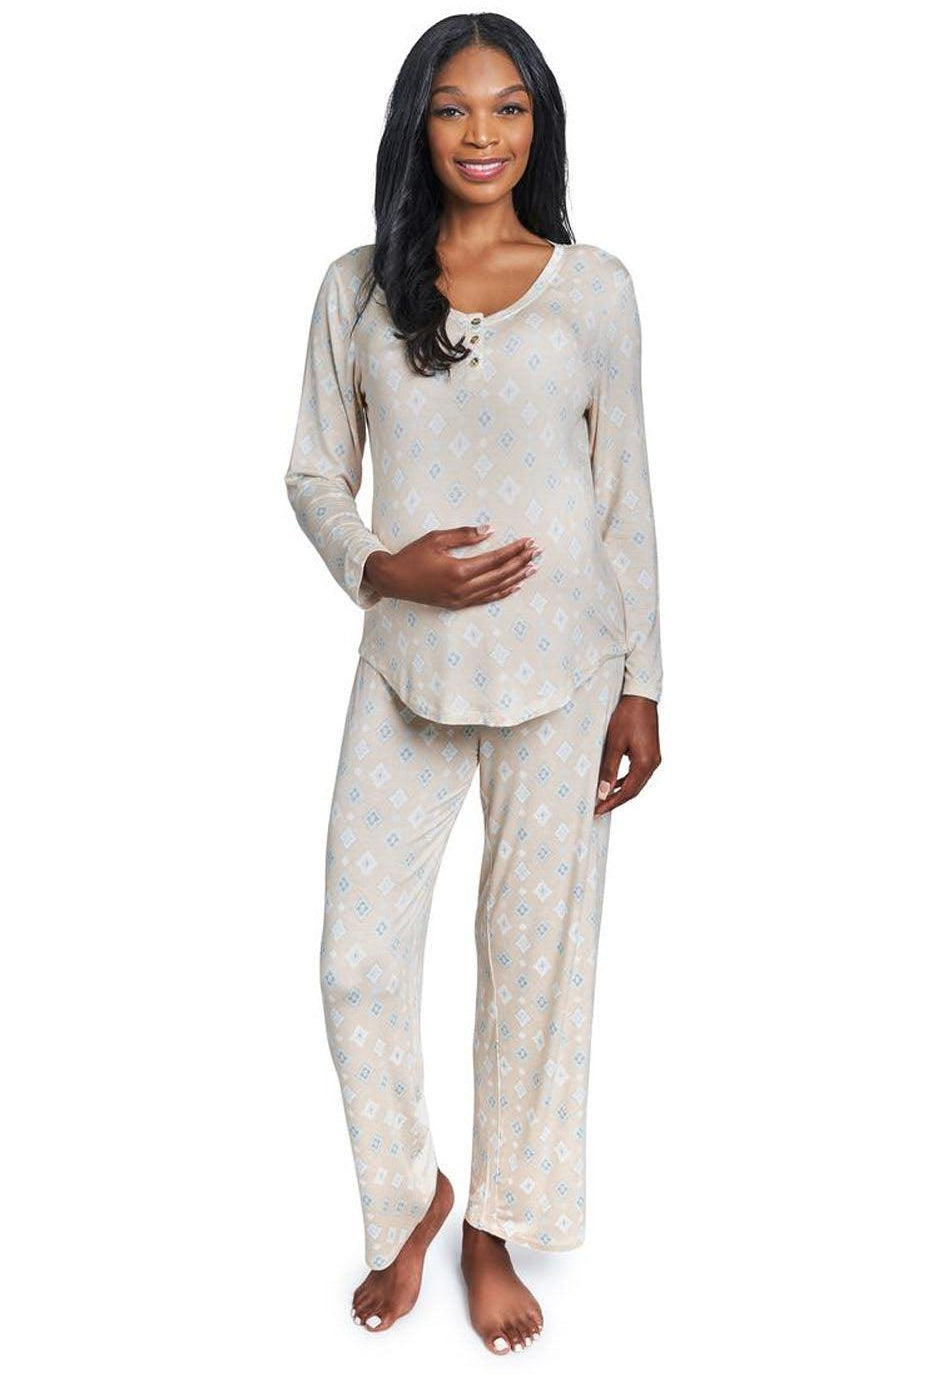 Kindred Bravely The Davy Nursing Pajamas  Nursing pajamas, Maternity  pajamas, Nursing pajama set